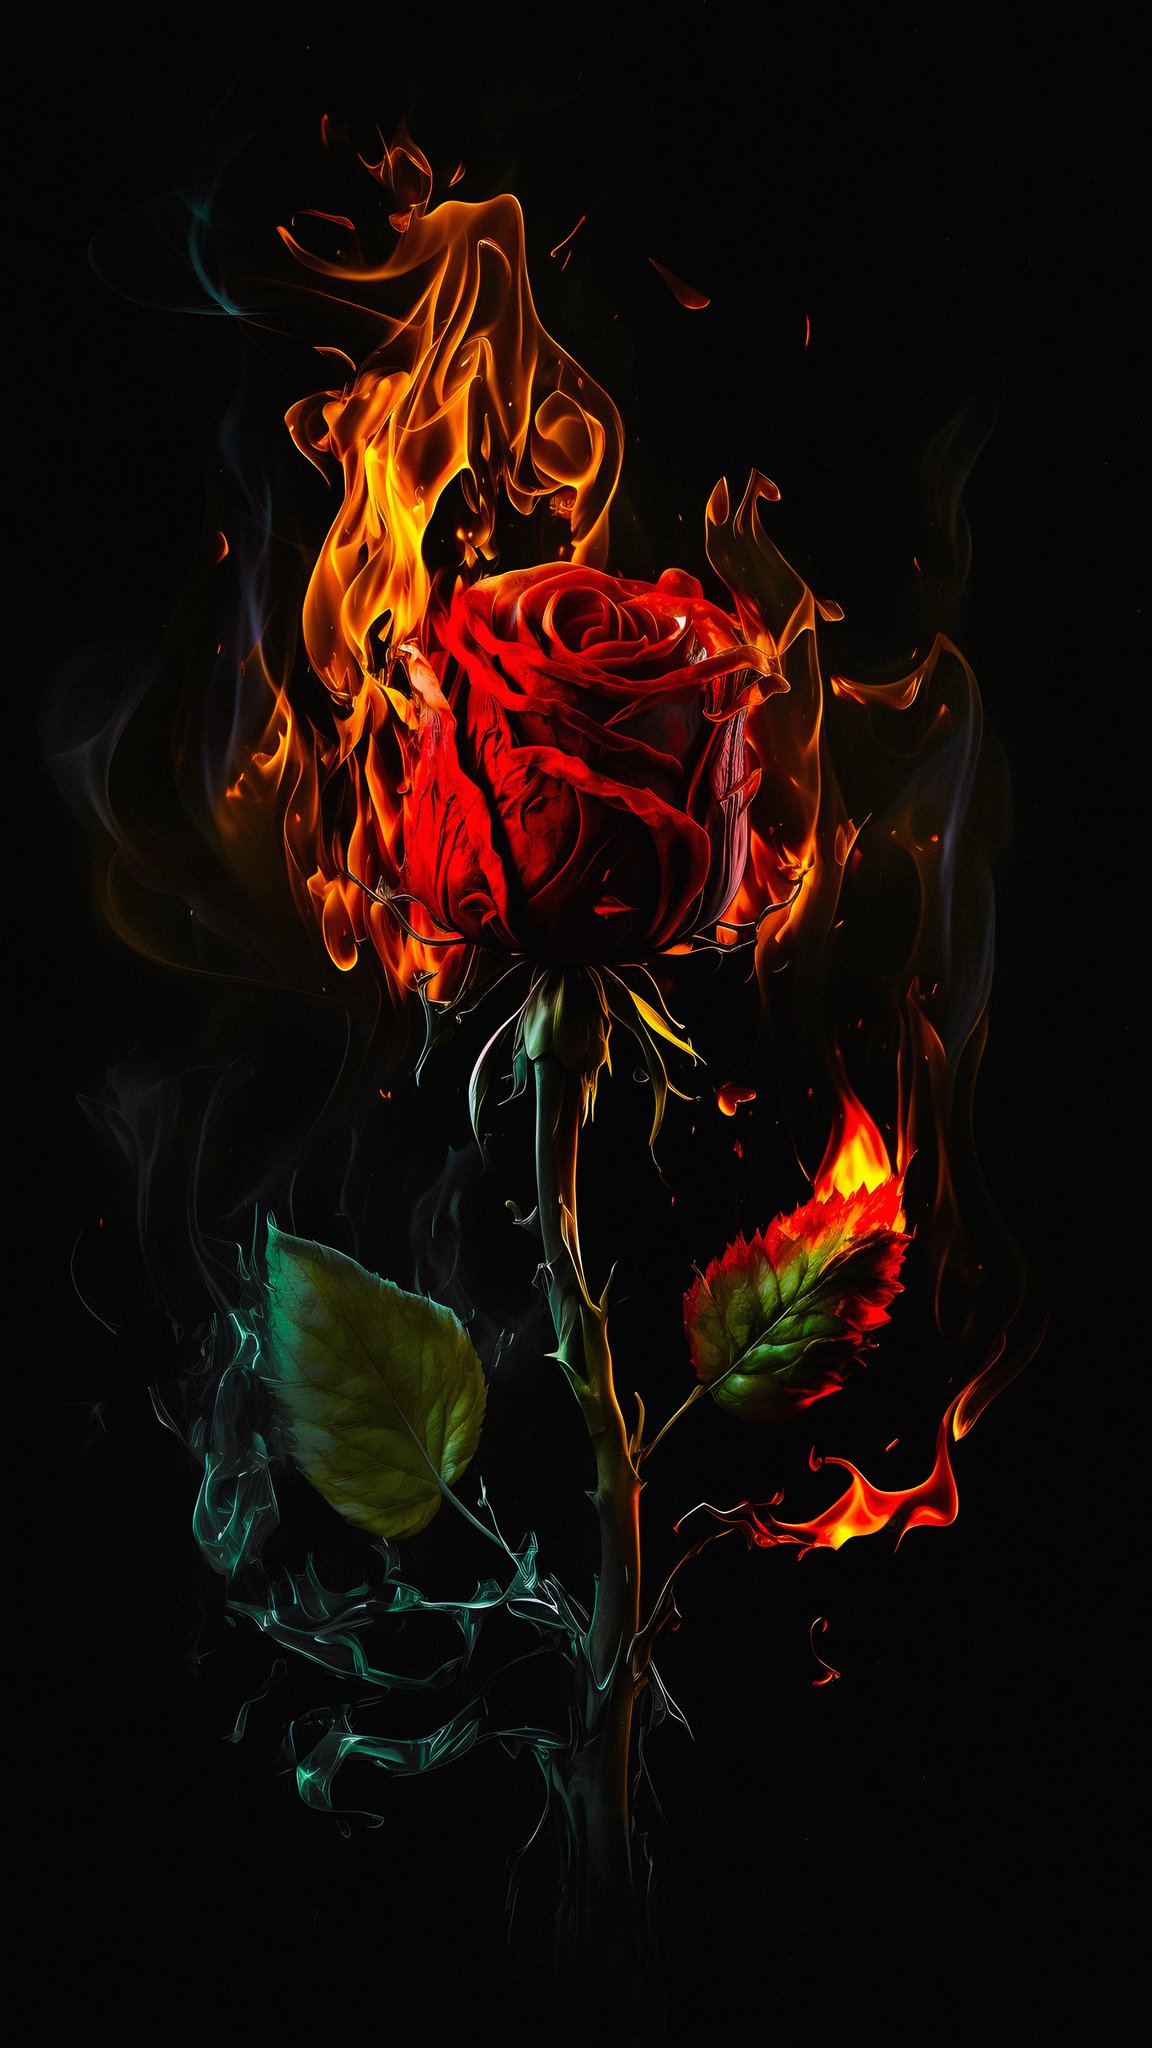 Rose On Fire Images  Free Download on Freepik